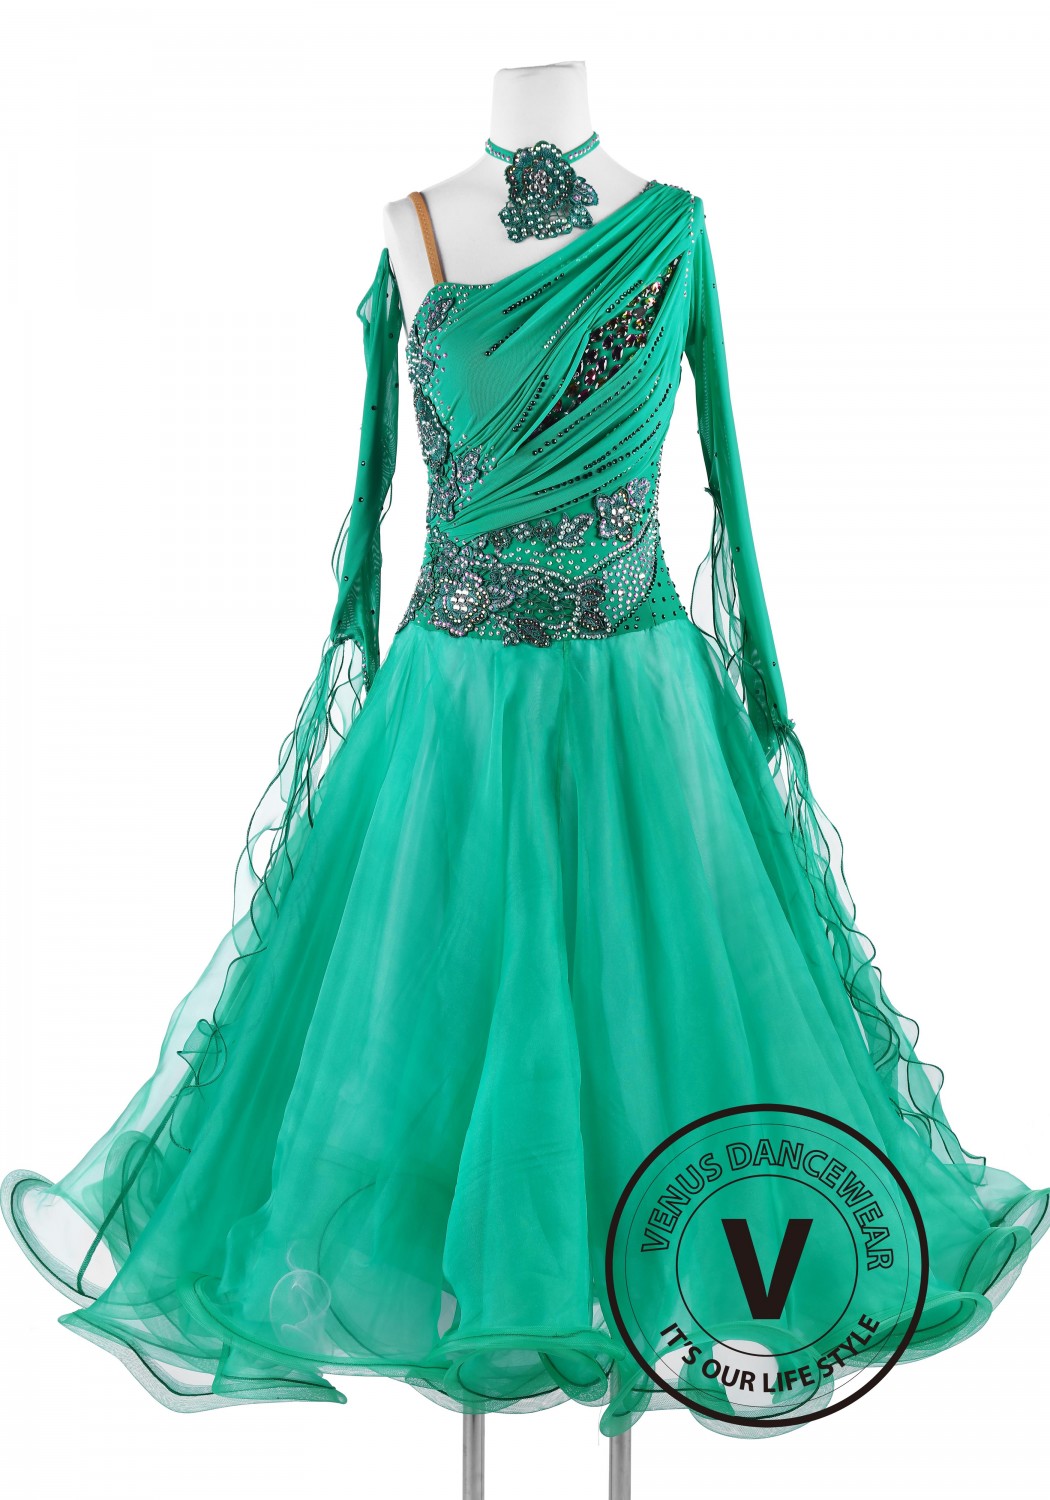 Green Lakes Standard Waltz Tango Competition Dance Dress